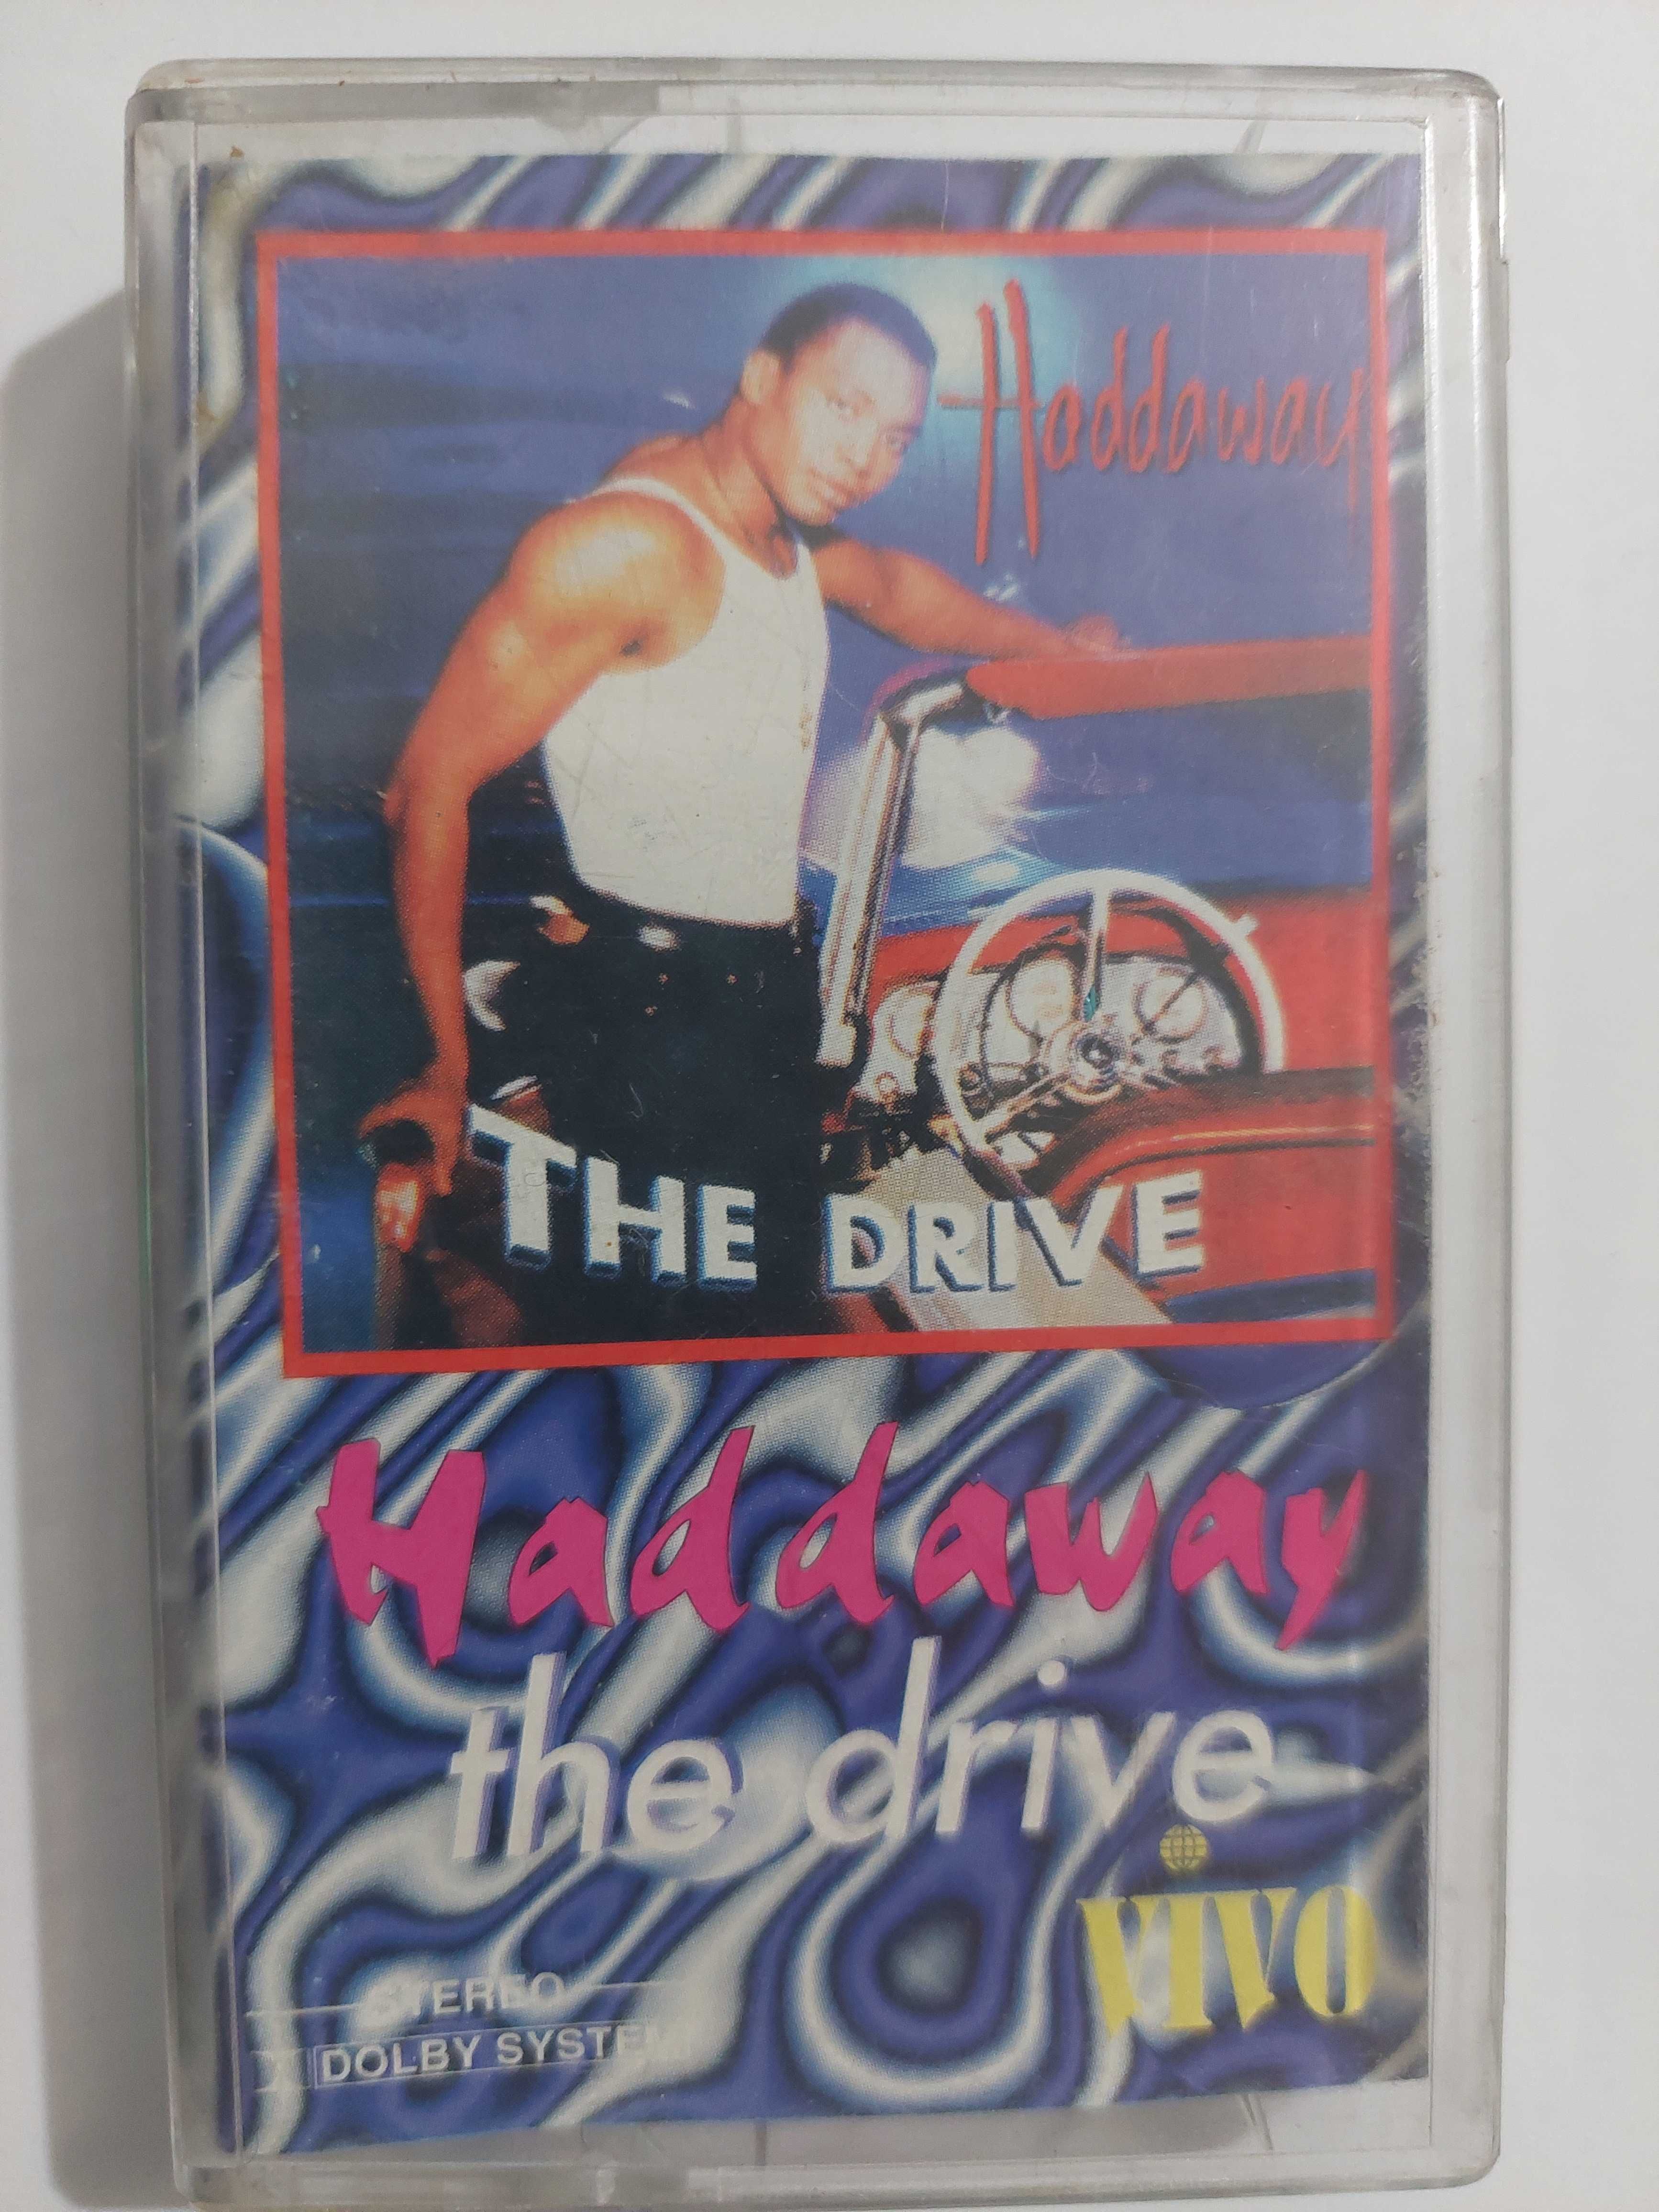 Haddaway - The drive